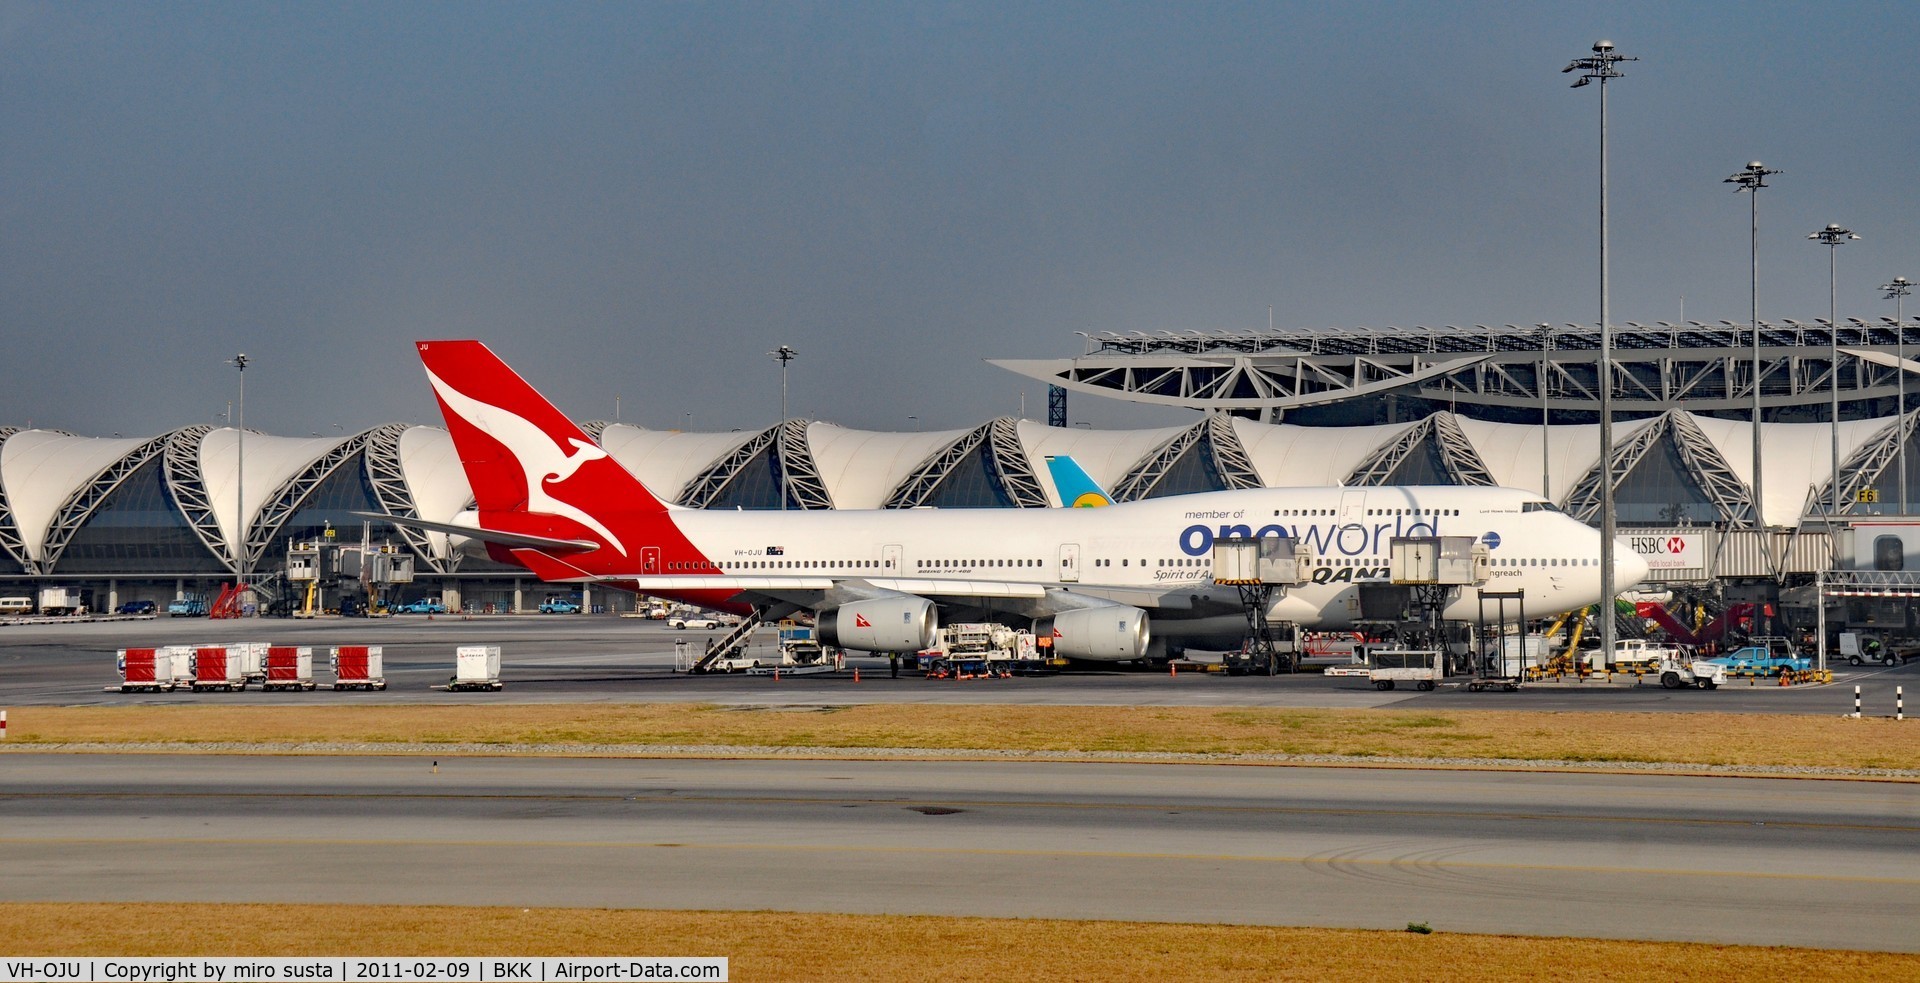 VH-OJU, 1999 Boeing 747-438 C/N 25566, Qantas Airlines Boeing 747-438 Airplane, Bangkok